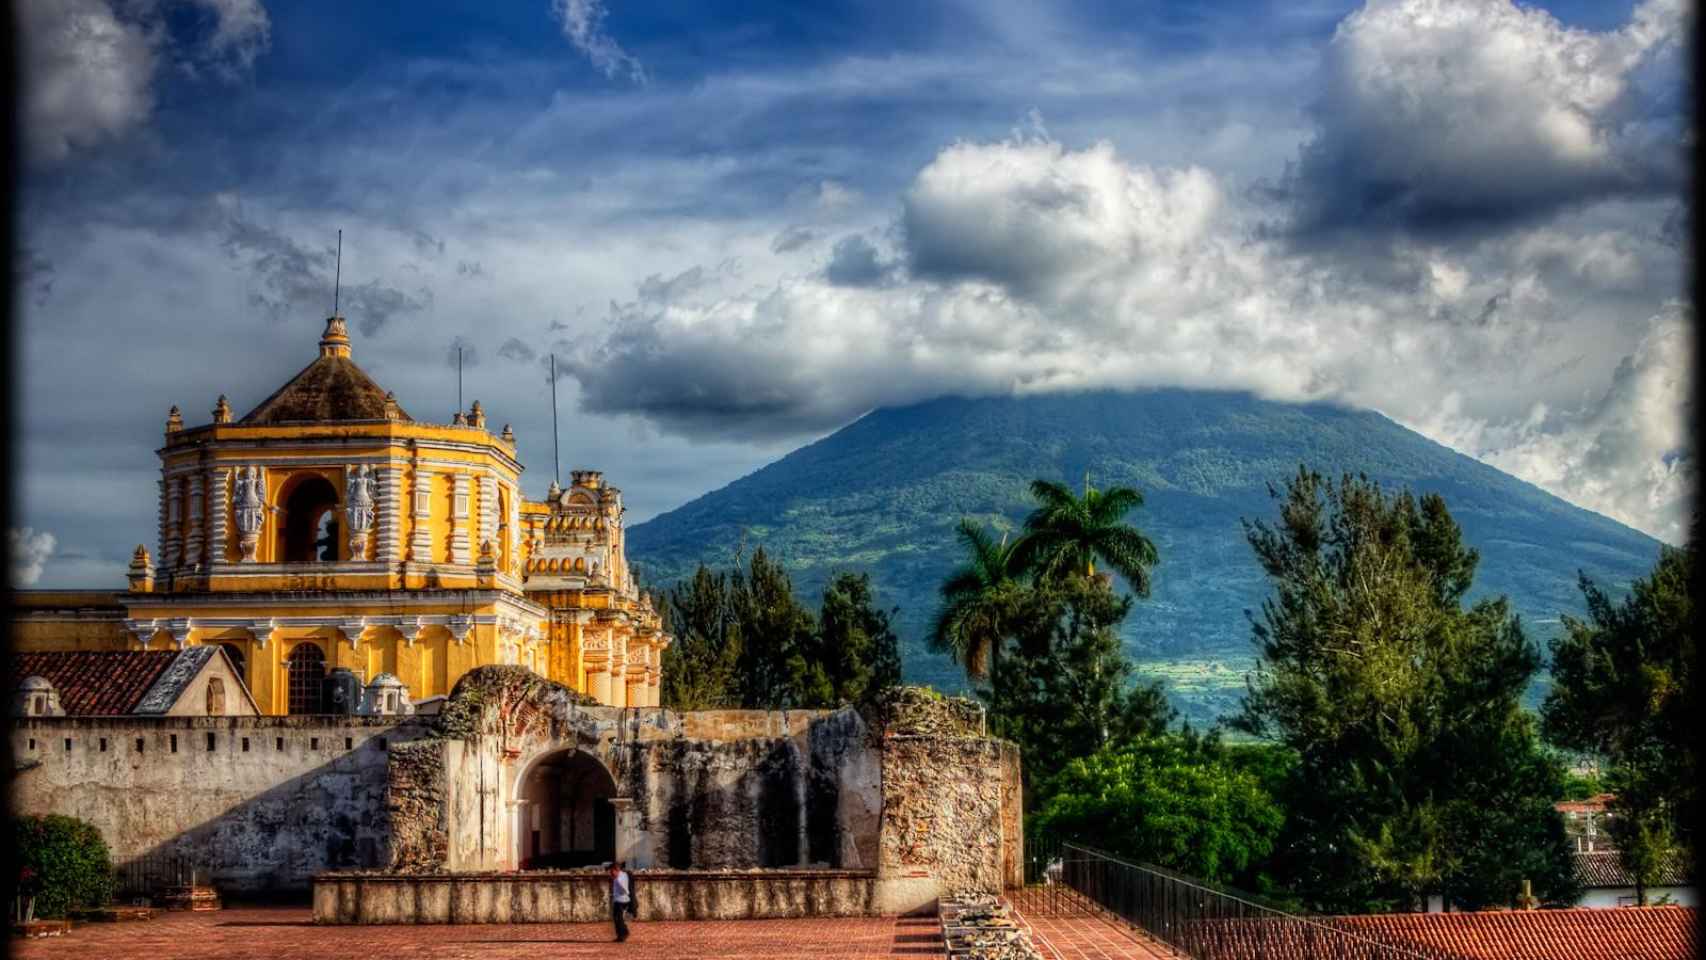 Vista de Antigua (Guatemala) con un volcán al fondo